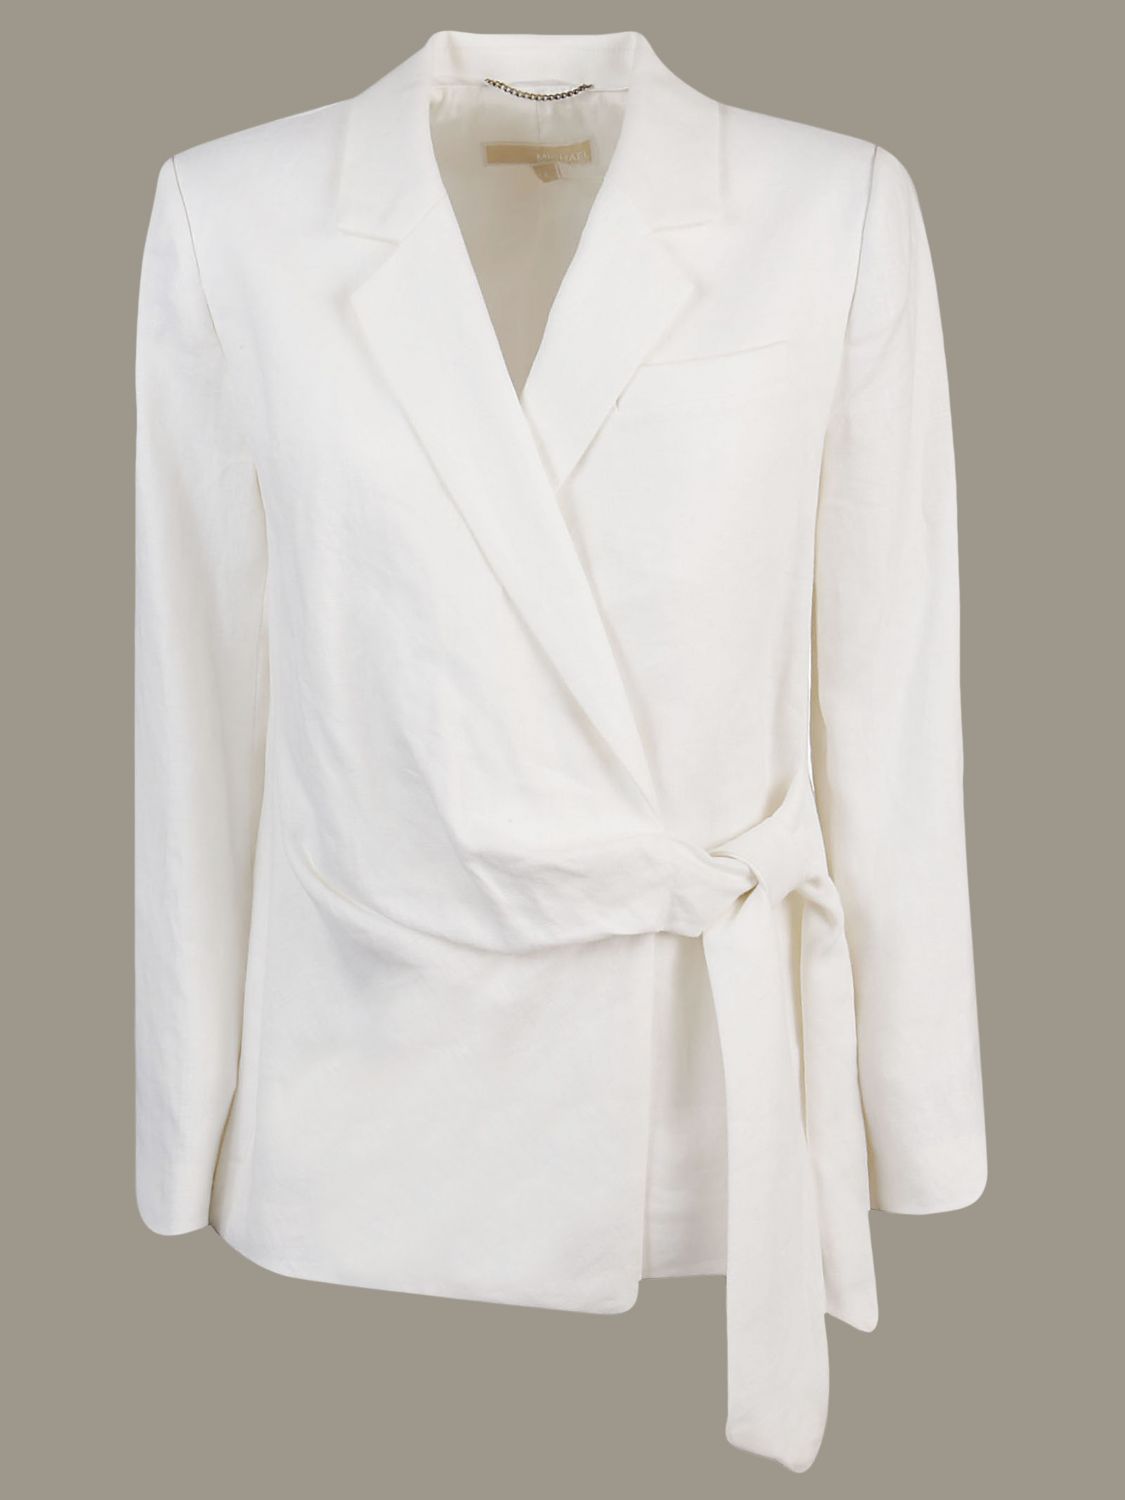 michael kors women's white jacket